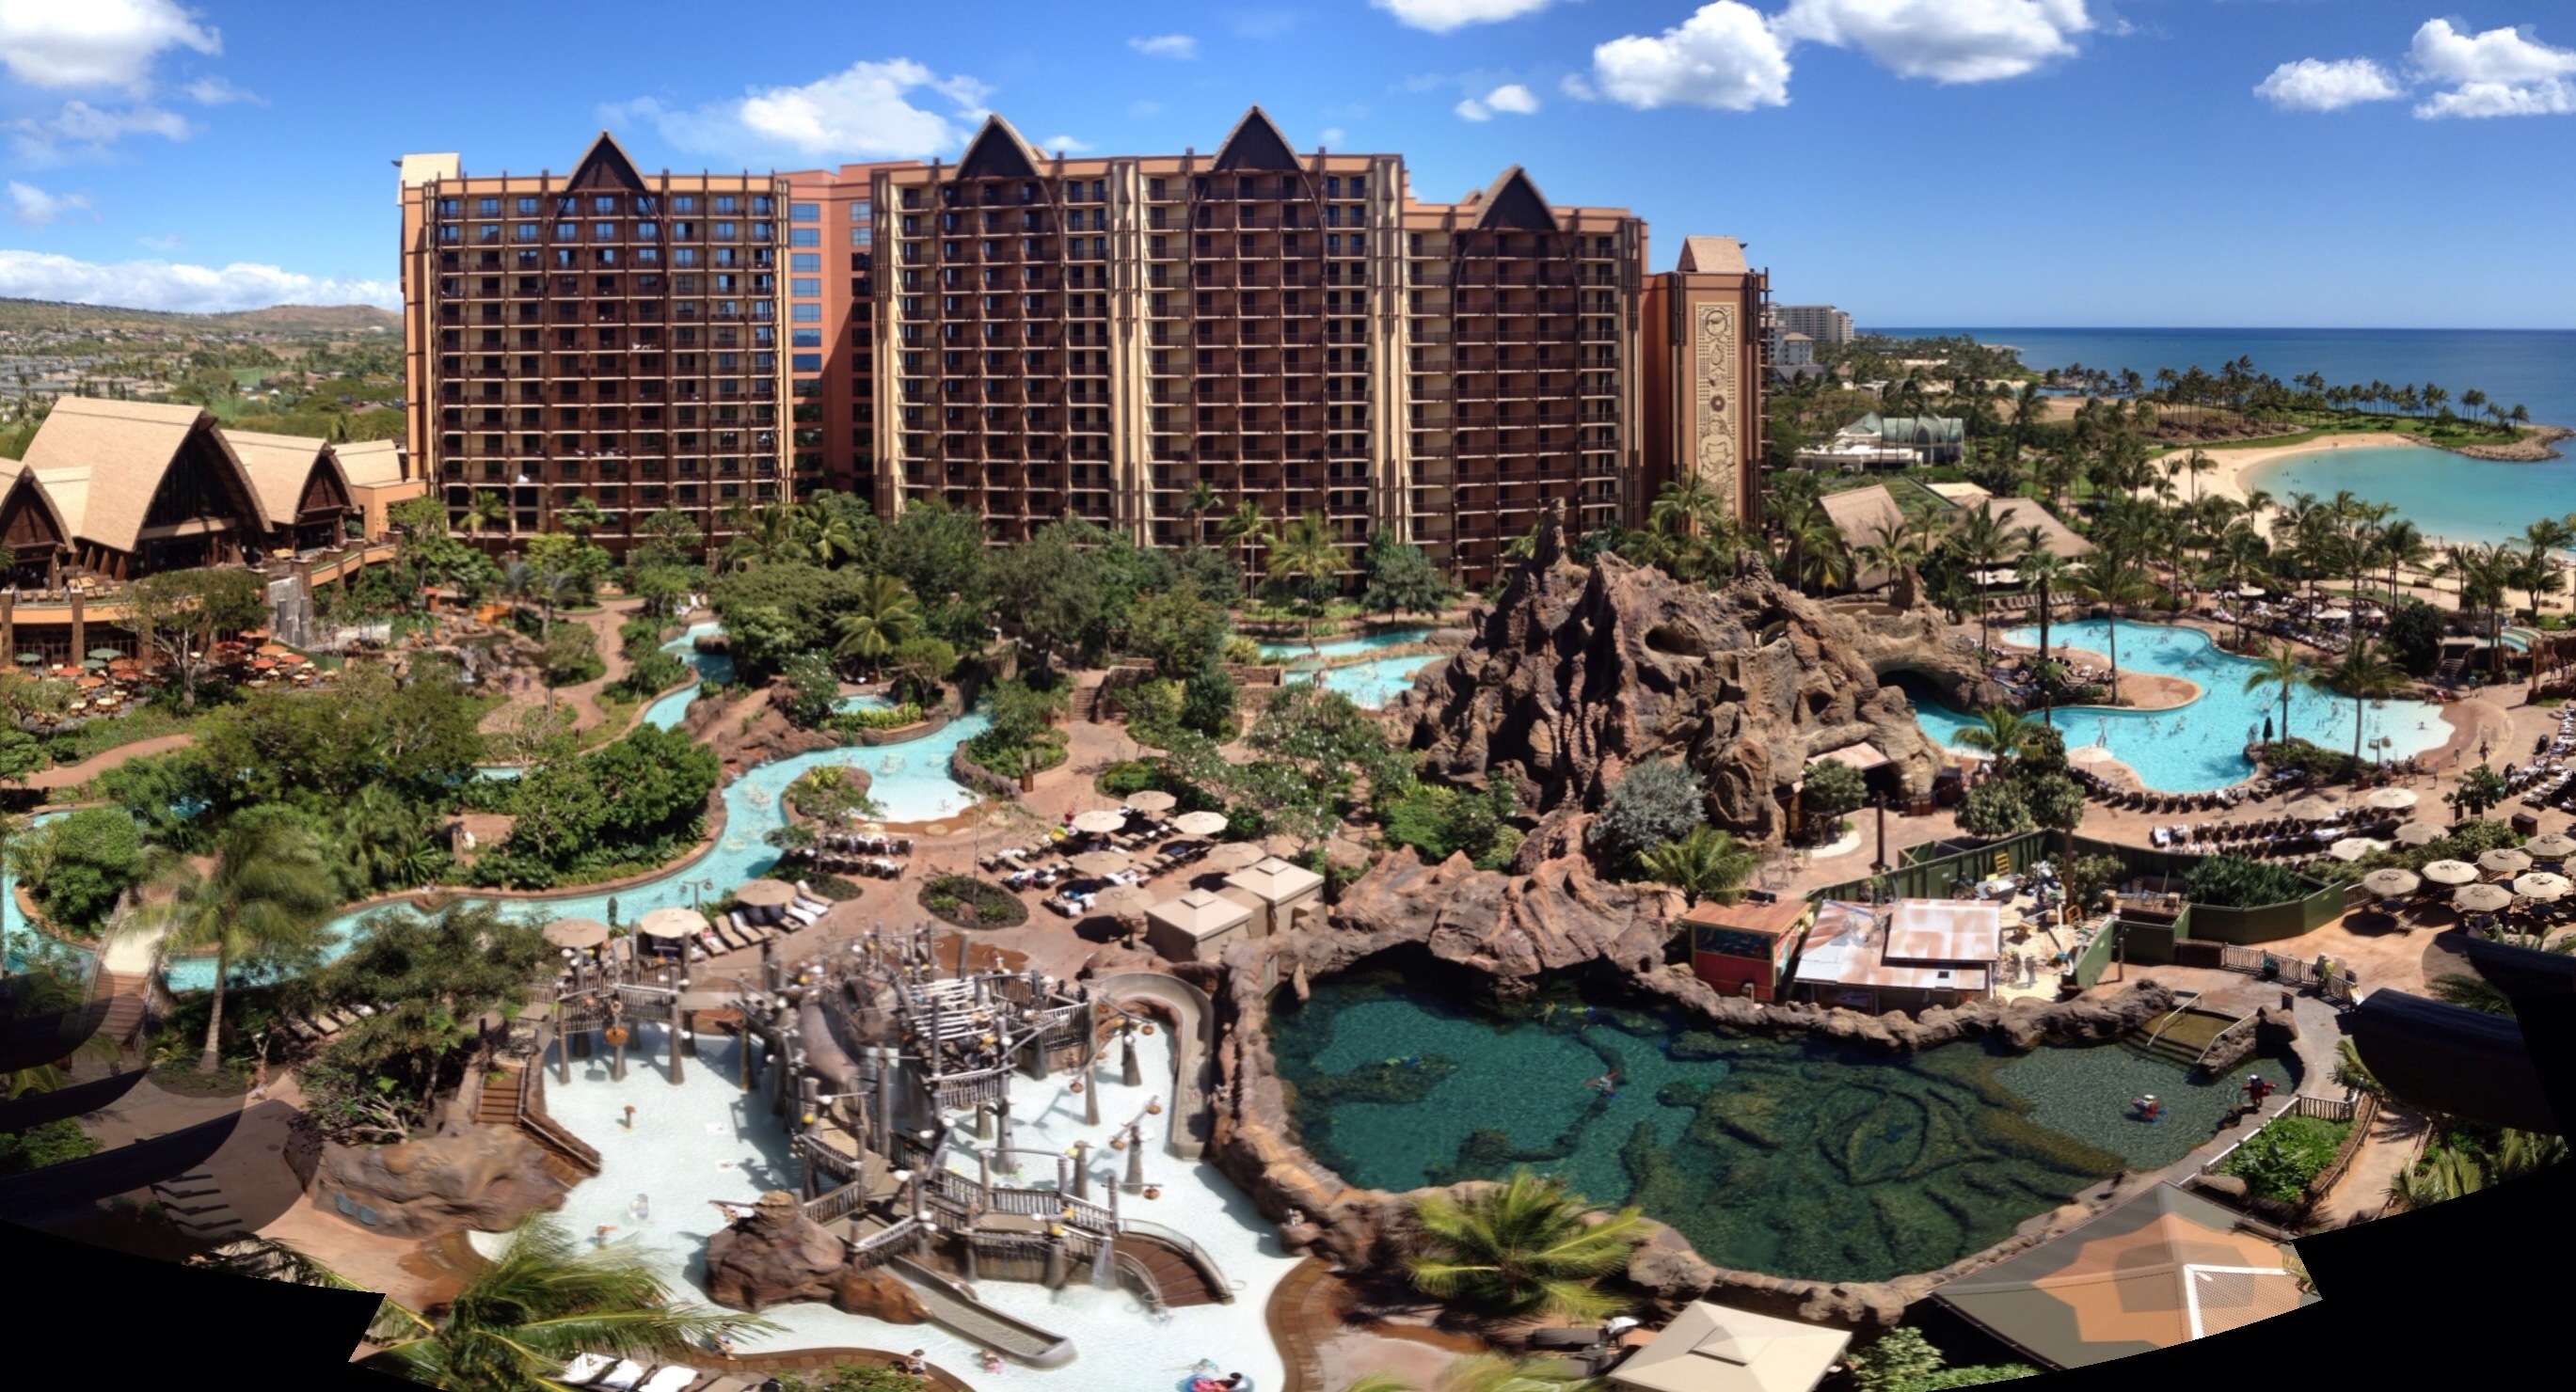 File:Aulani, a Disney Resort & Spa by Anthony Quintano.jpg - Wikimedia